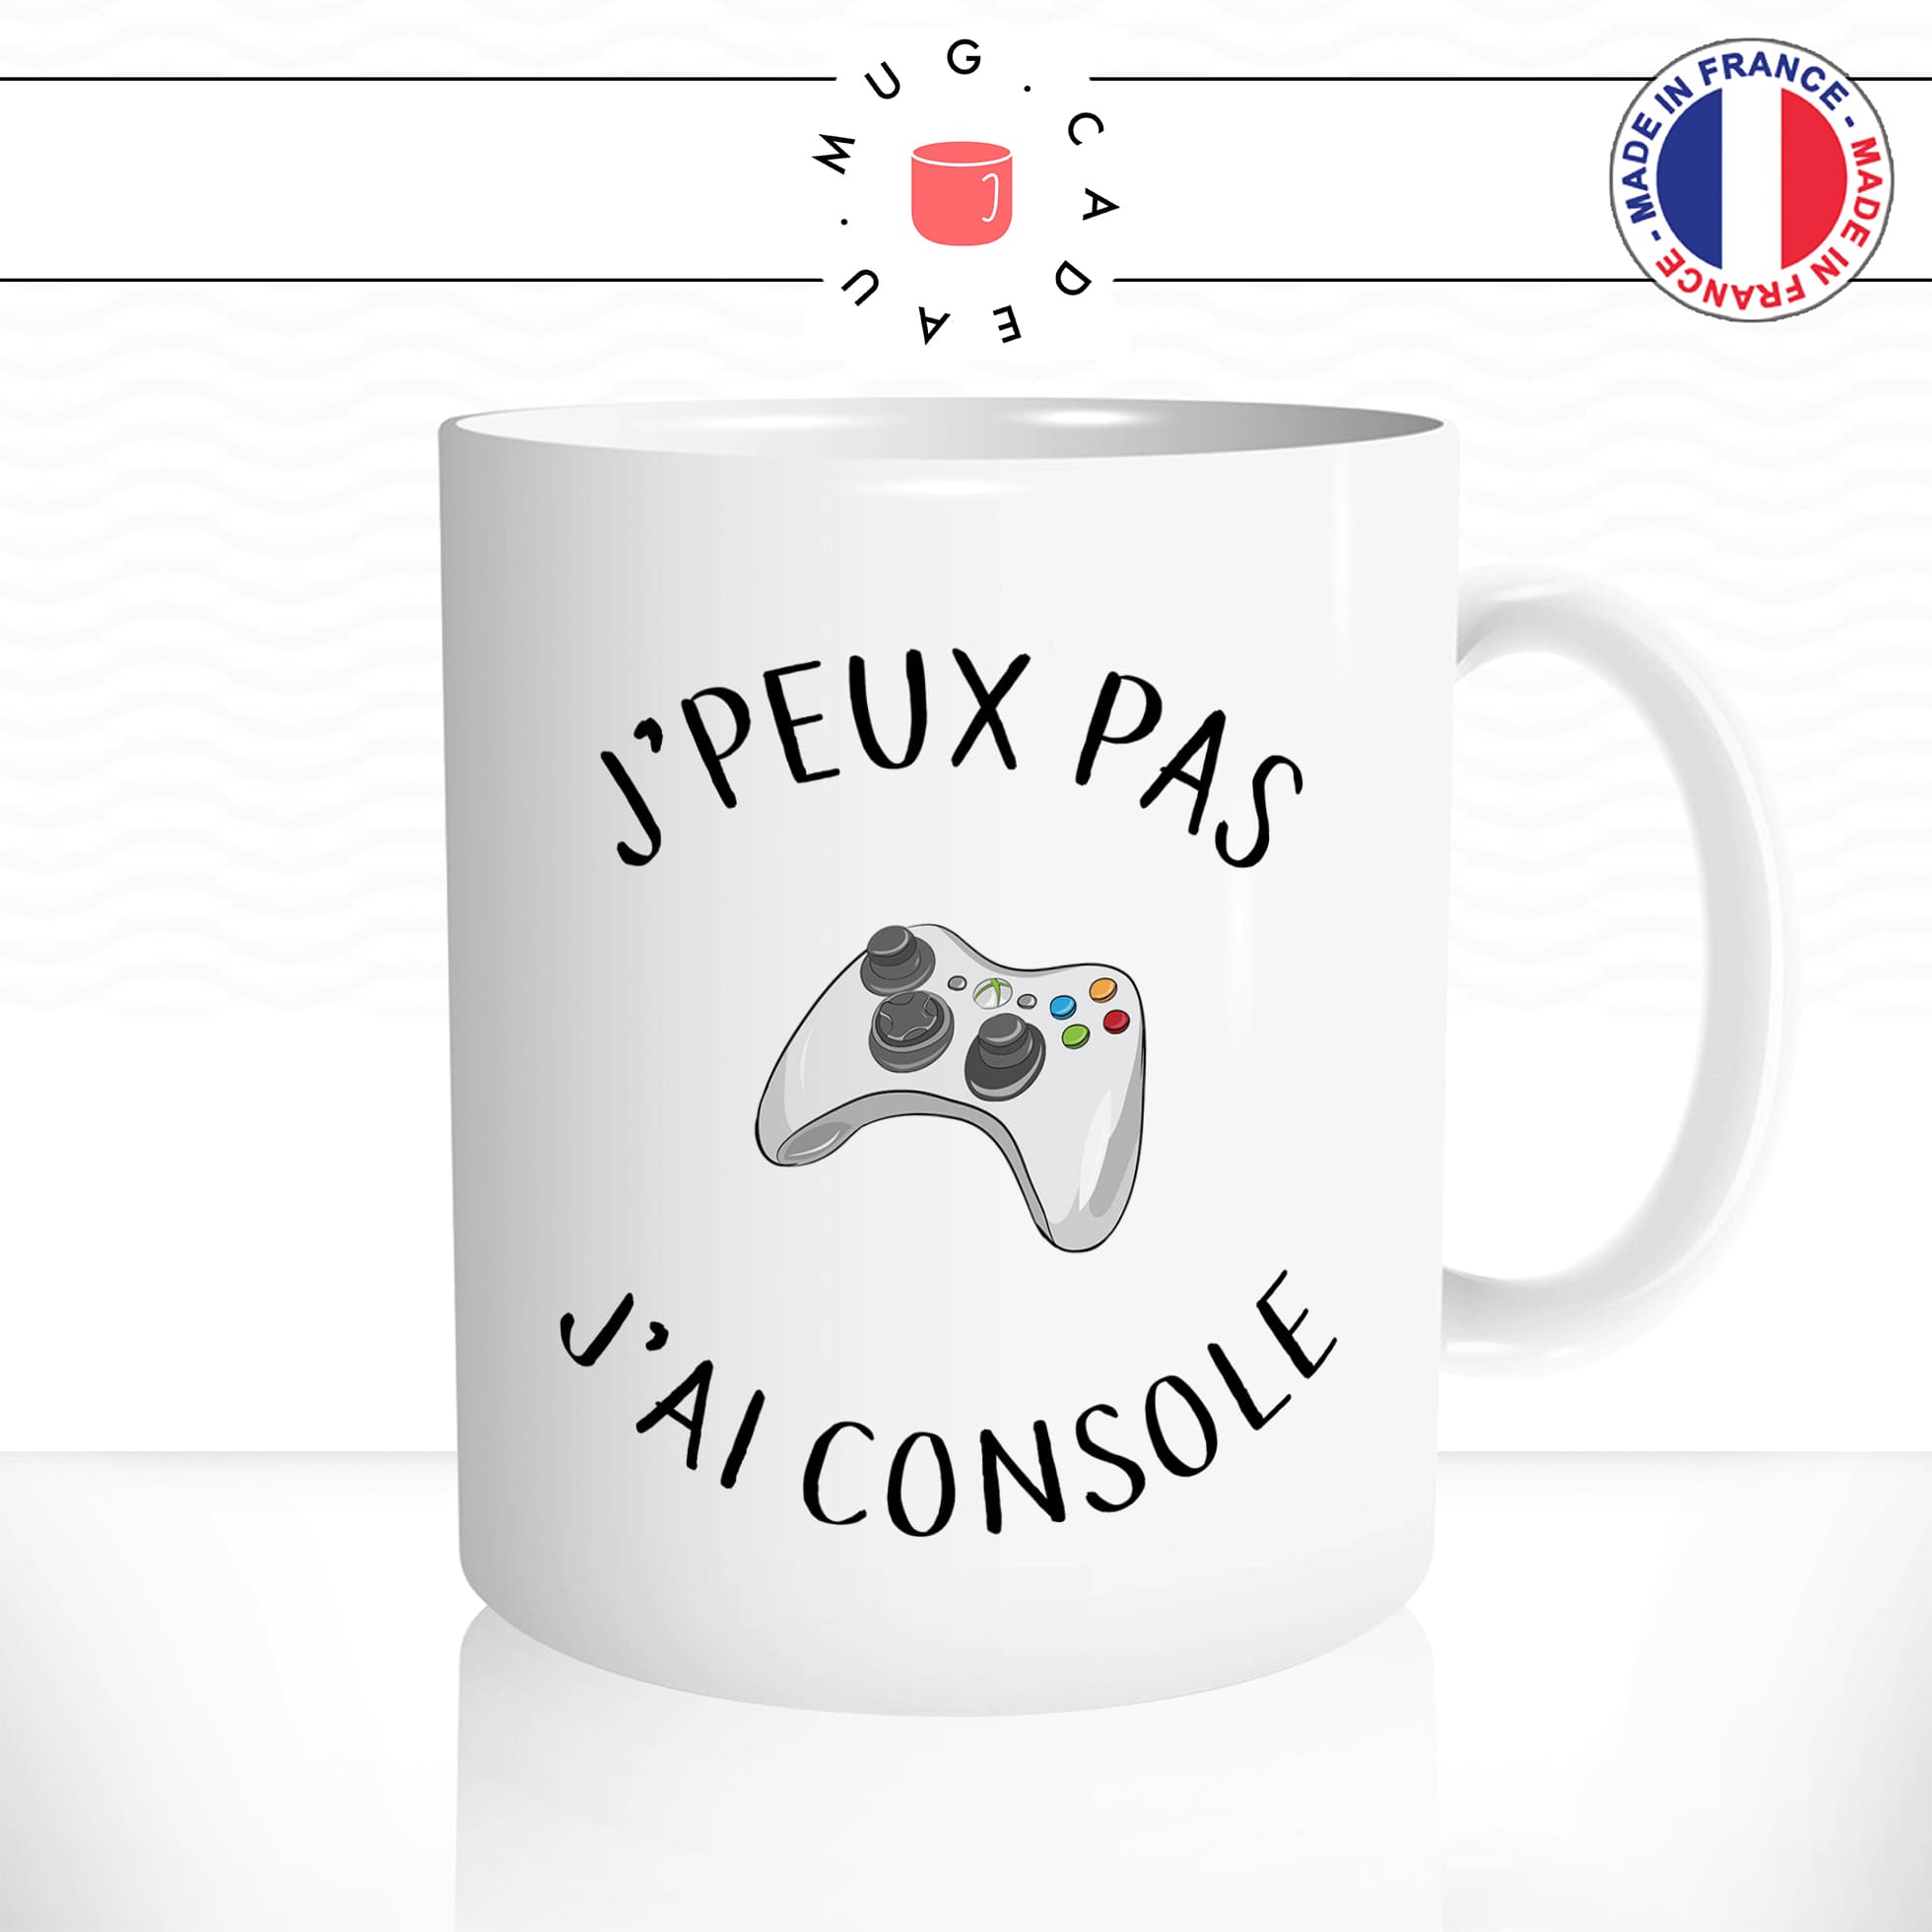 mug-tasse-jpeux-pas-jai-console-jeu-video-gamer-gaming-geek-humour-original-mugs-tasses-café-thé-idée-cadeau-personnalisée2